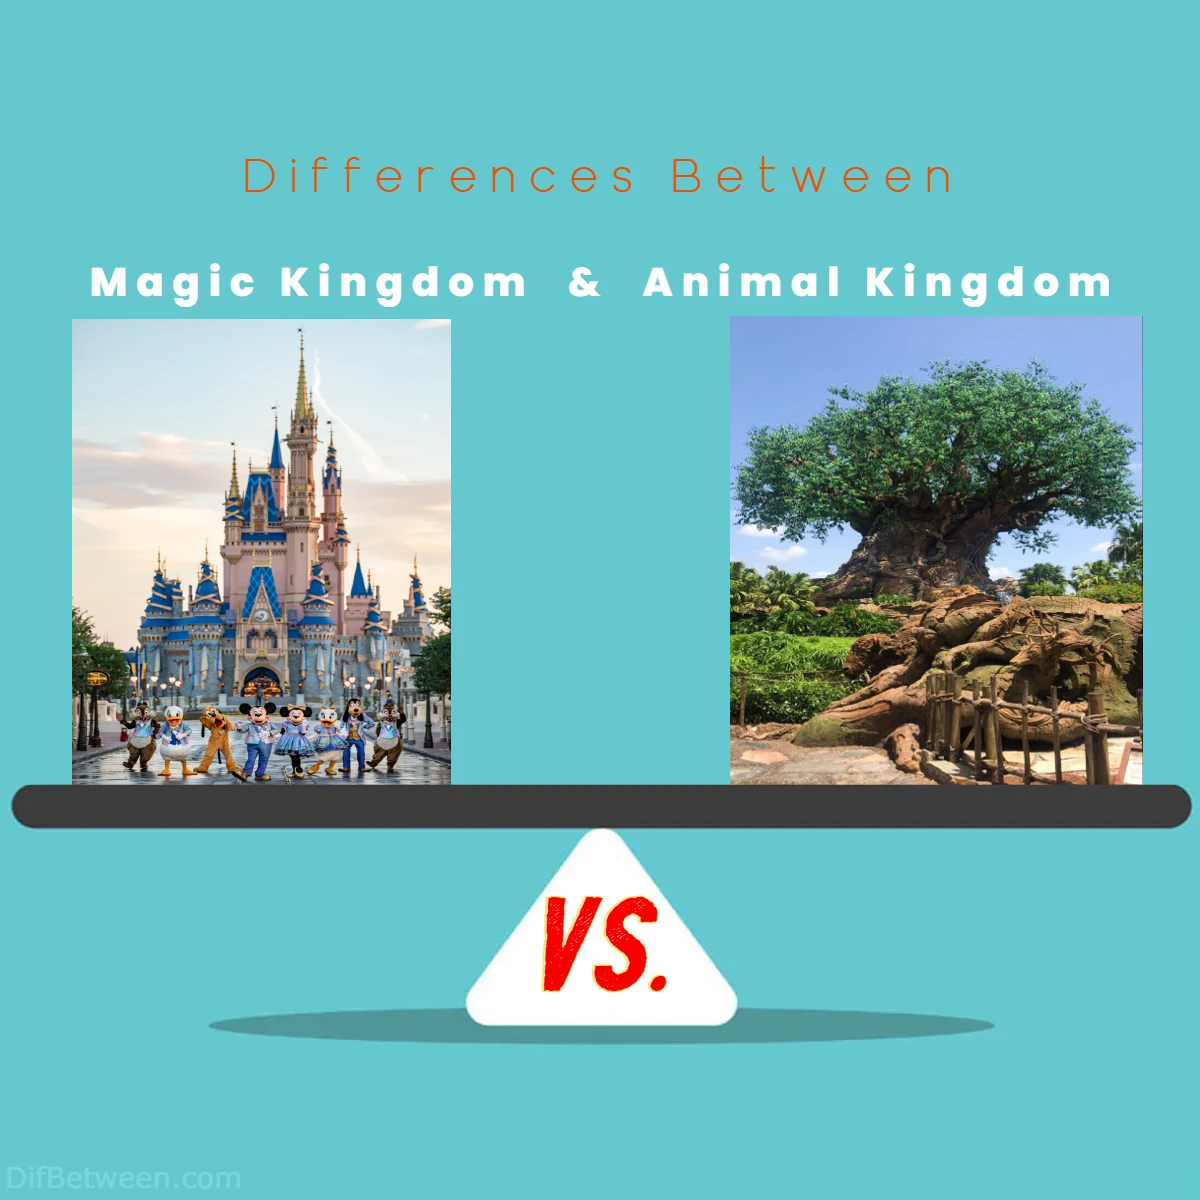 Differences Between Magic Kingdom vs Animal Kingdom